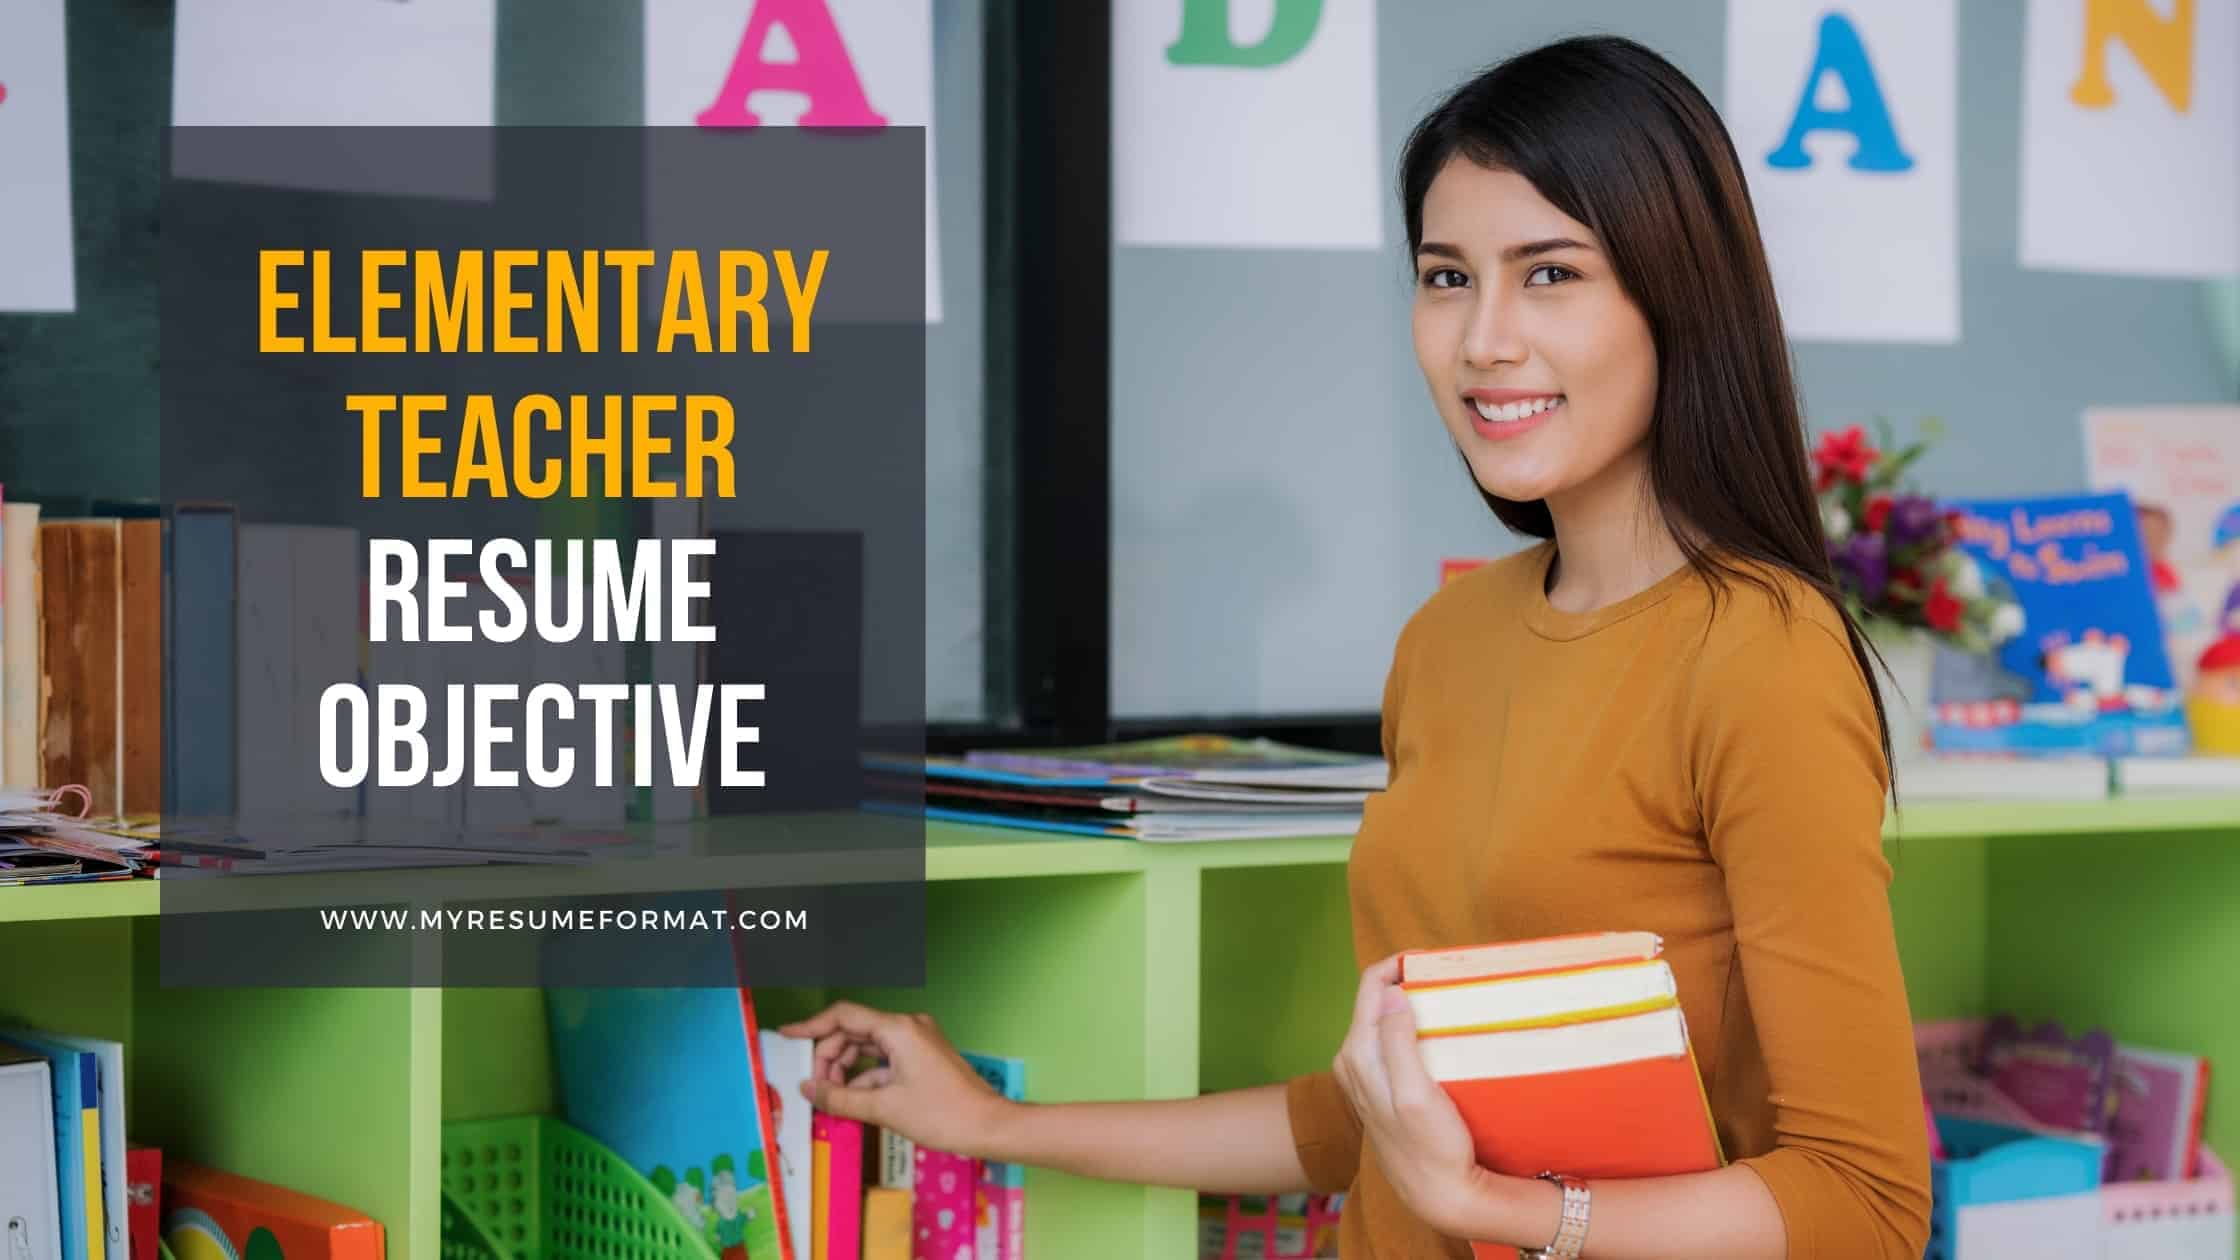 Elementary Teacher resume objective